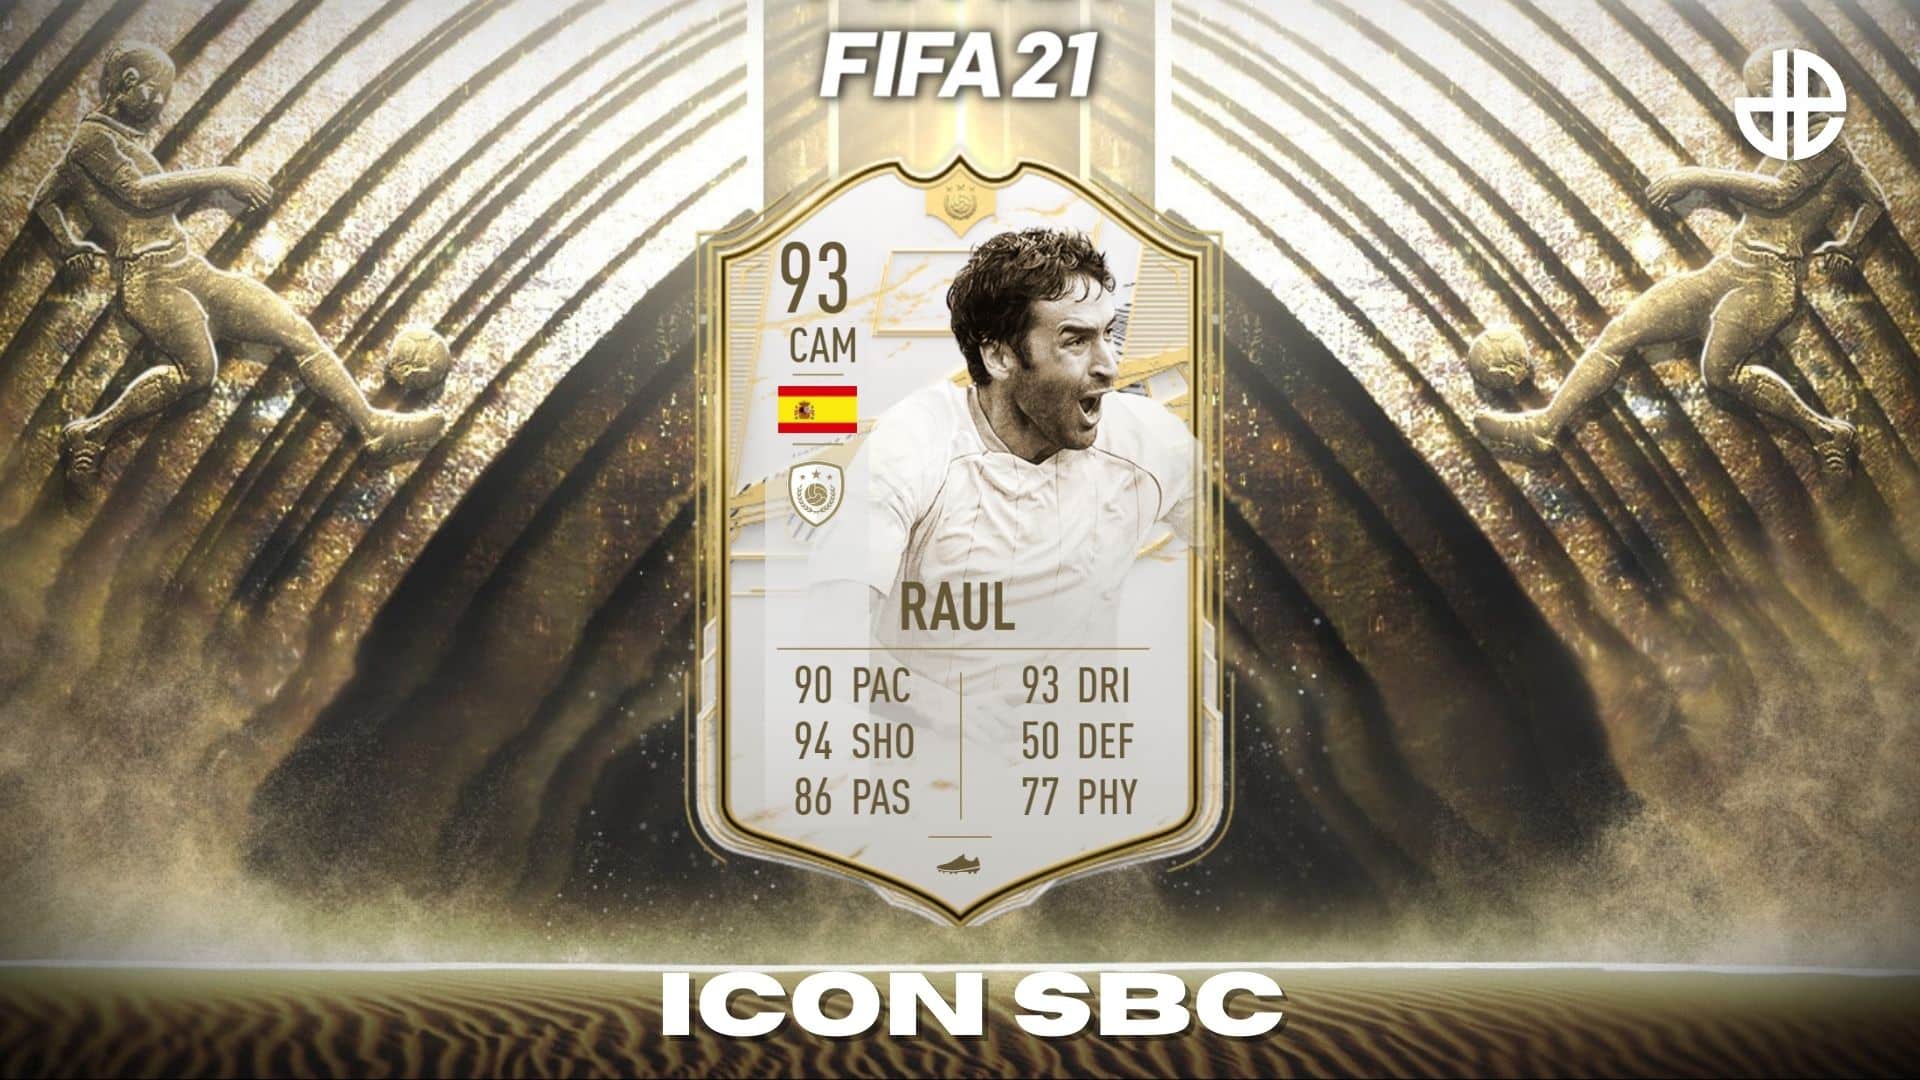 Raul FIFA 21 Prime ICON SBC